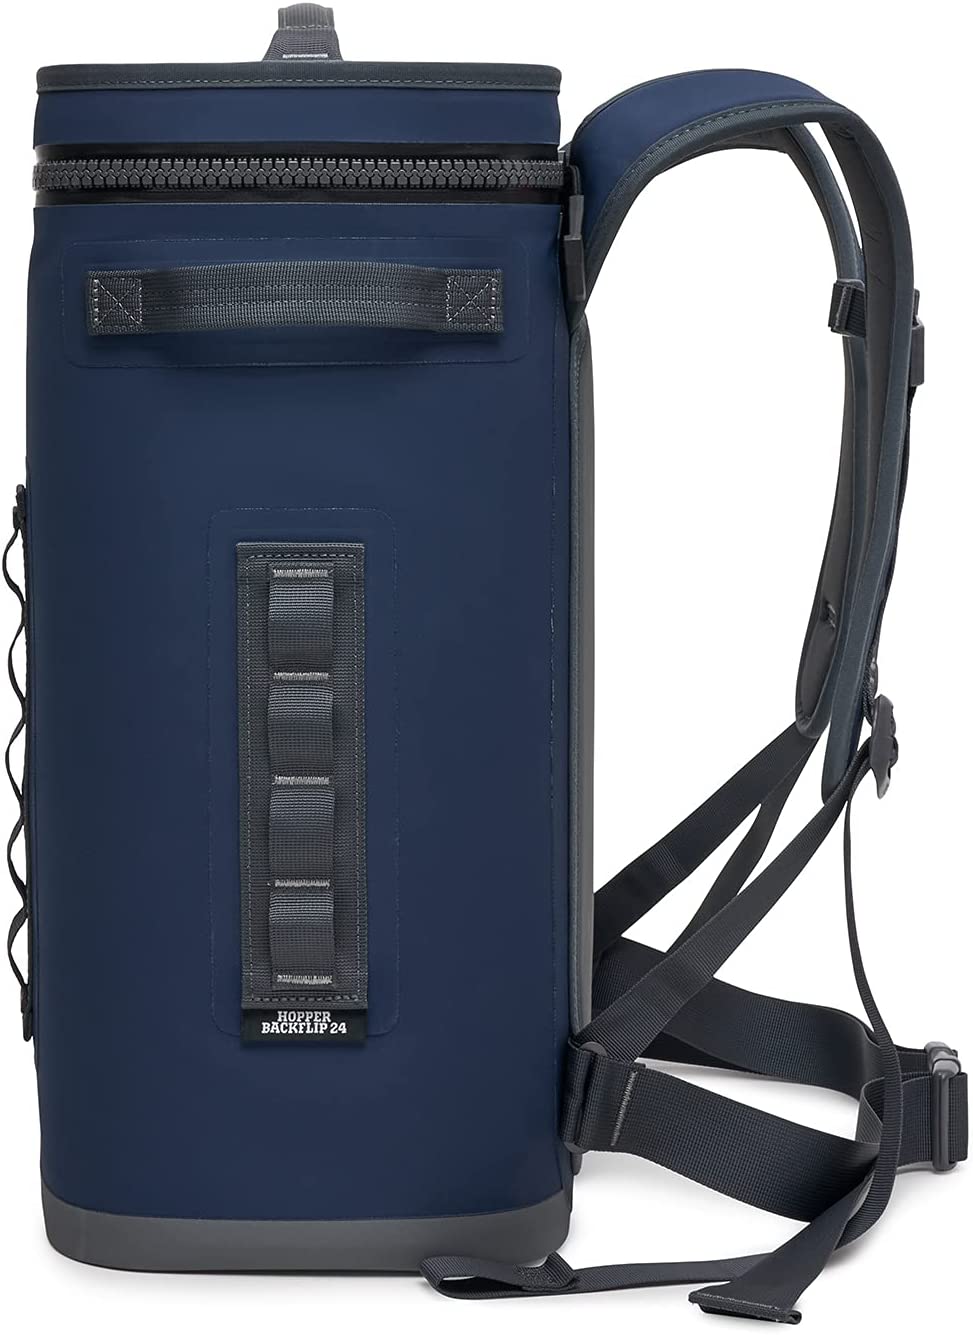 YETI Hopper Backflip 24 Soft Sided Cooler/Backpack, Charcoal–